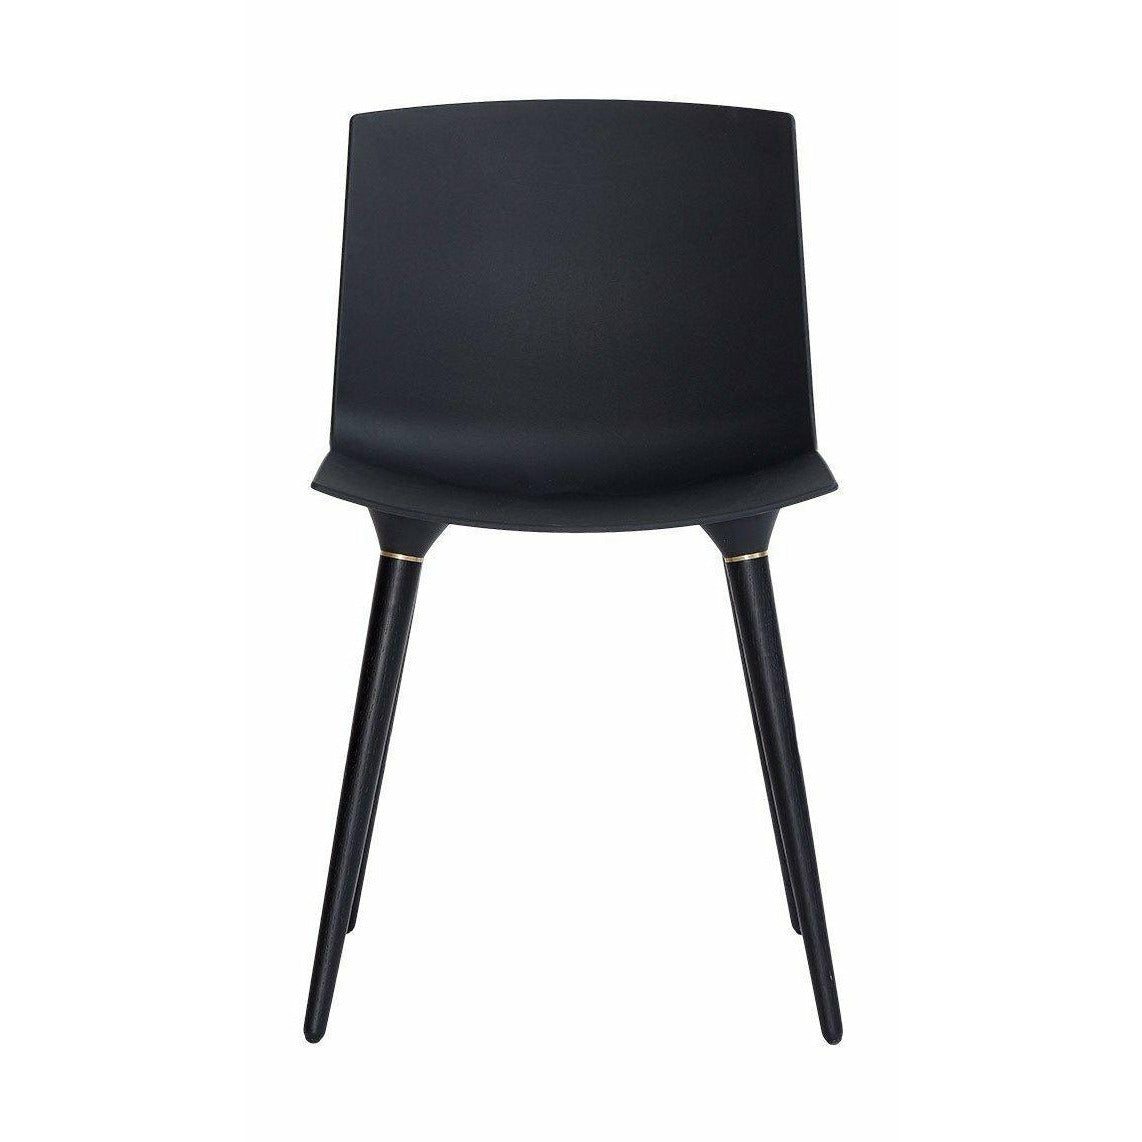 Andersen Furniture TAC Židle Black Lacquered dub, černé plastové sedadlo